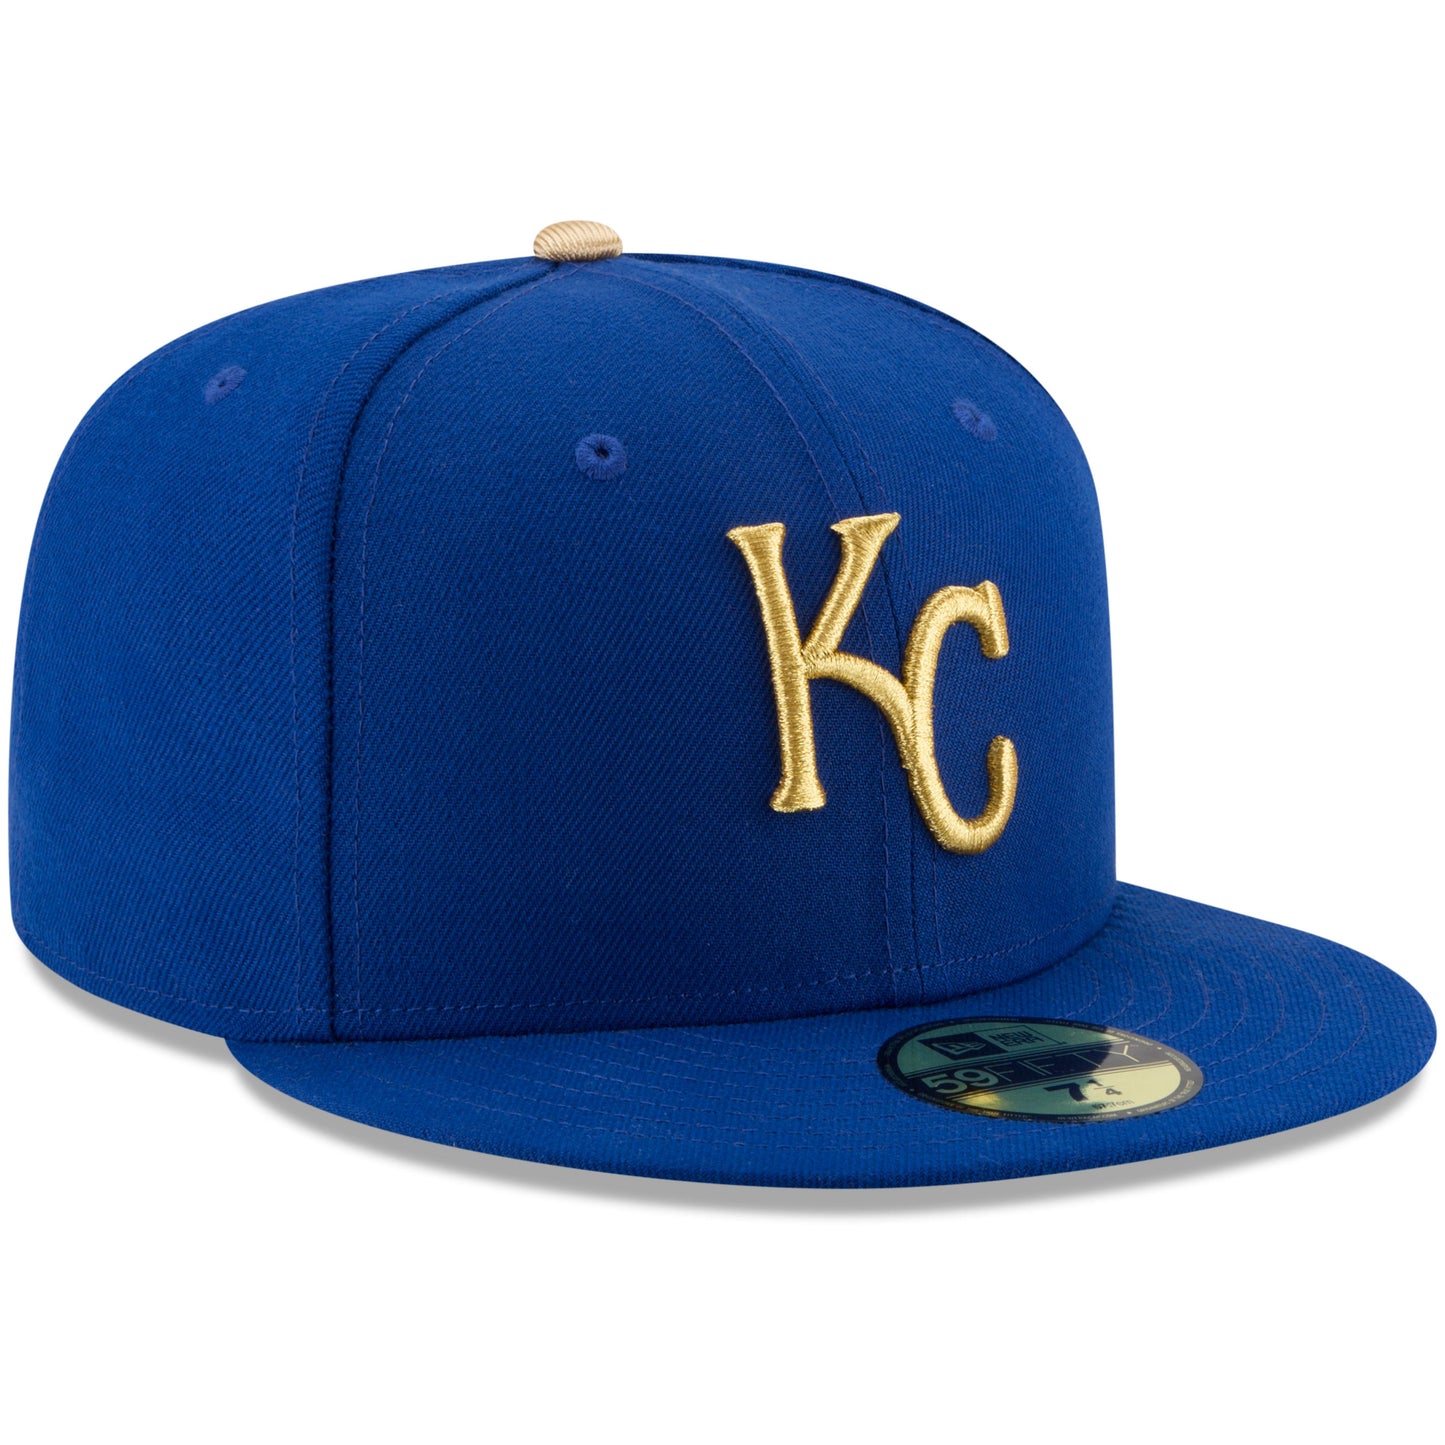 New Era 59FIFTY Kansas City Royals